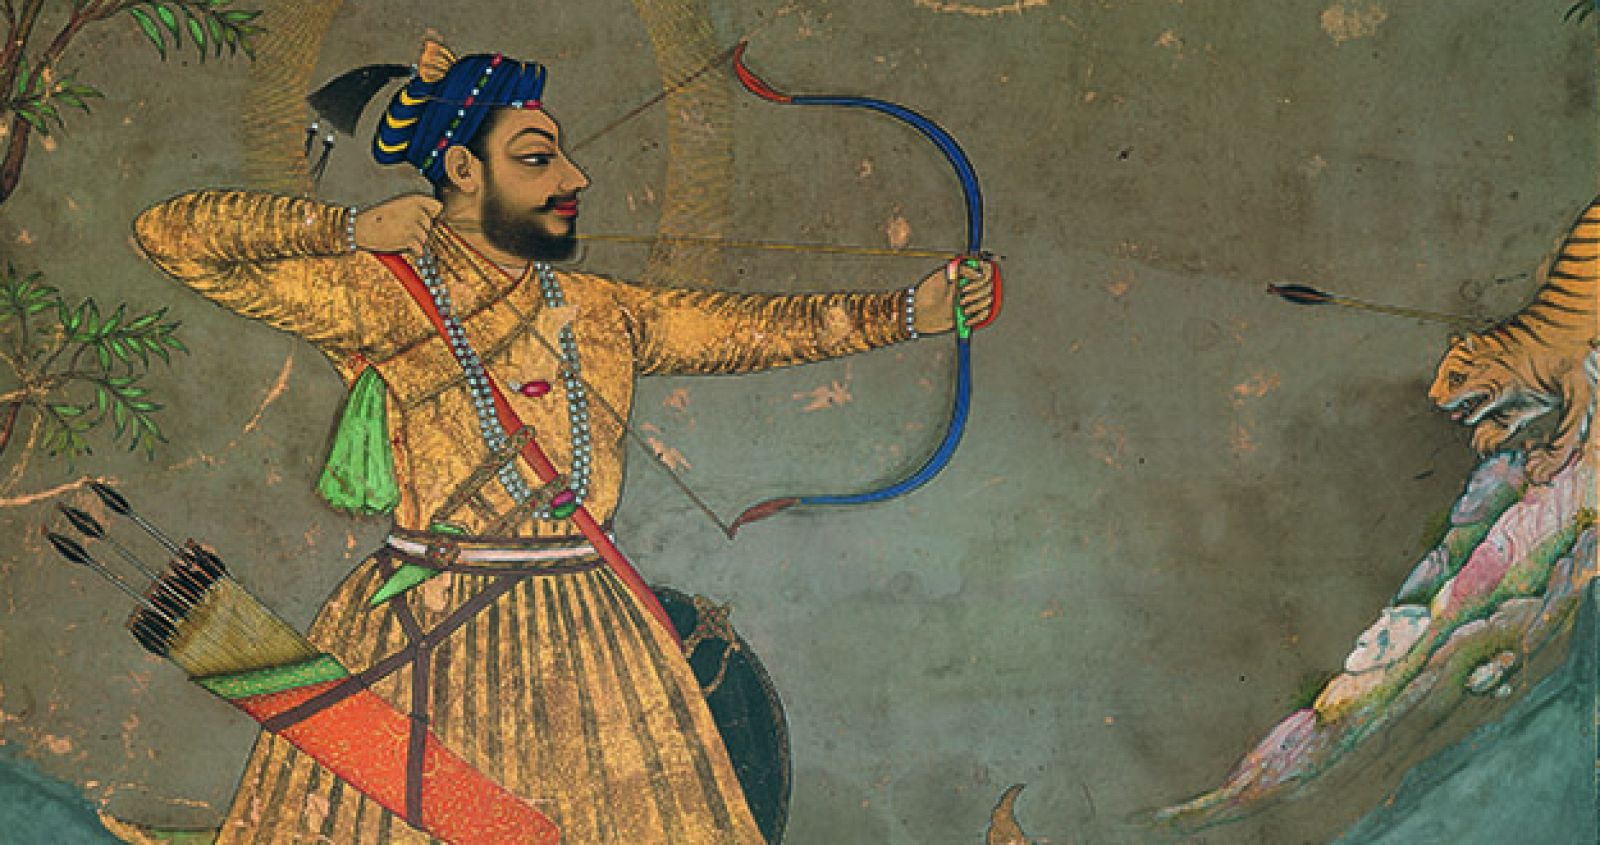 "El Sultan 'Ali 'Adil Shah II abate un tigre", Bijapur (1660)